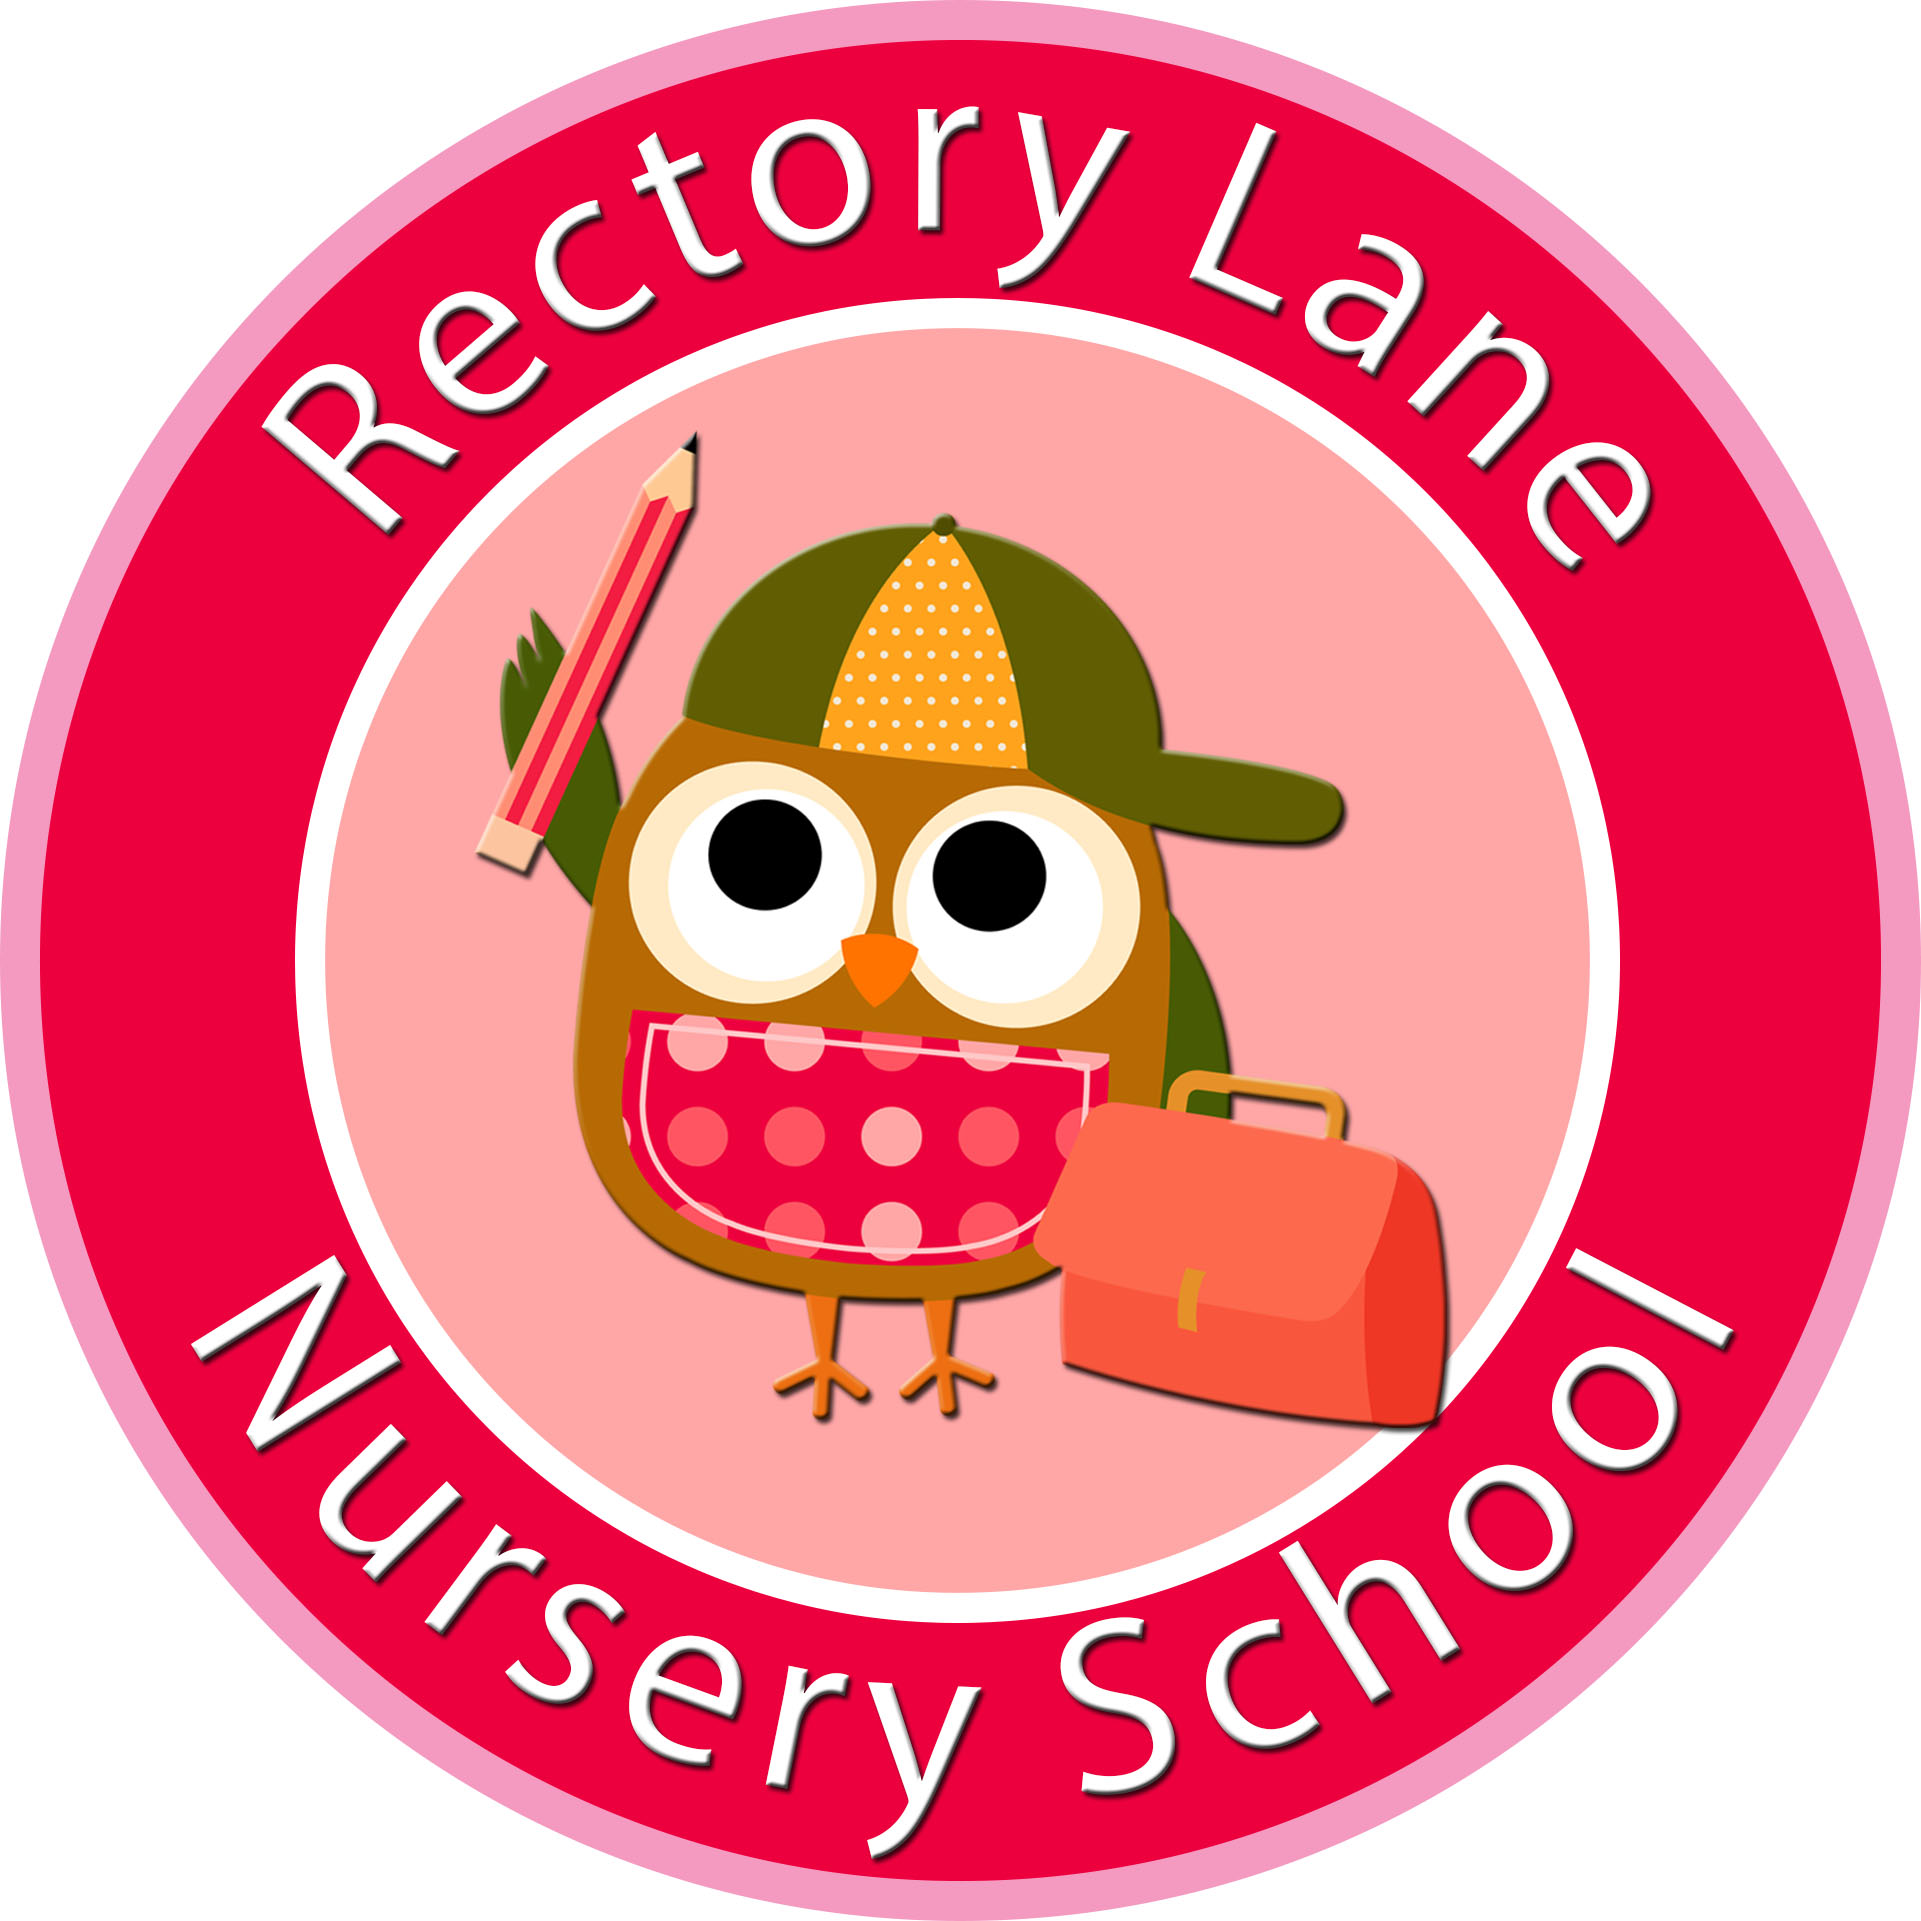 Rectory Lane Nursery